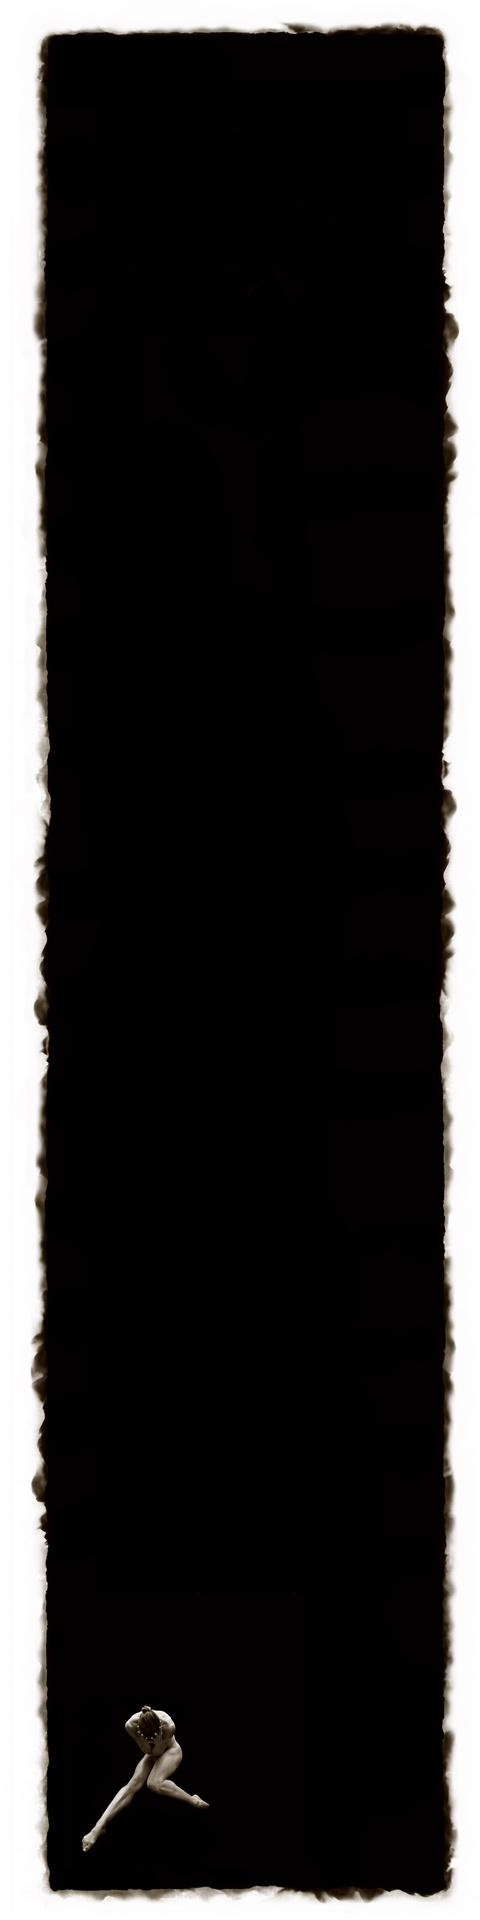  Volari Pigment print on Baryte paper